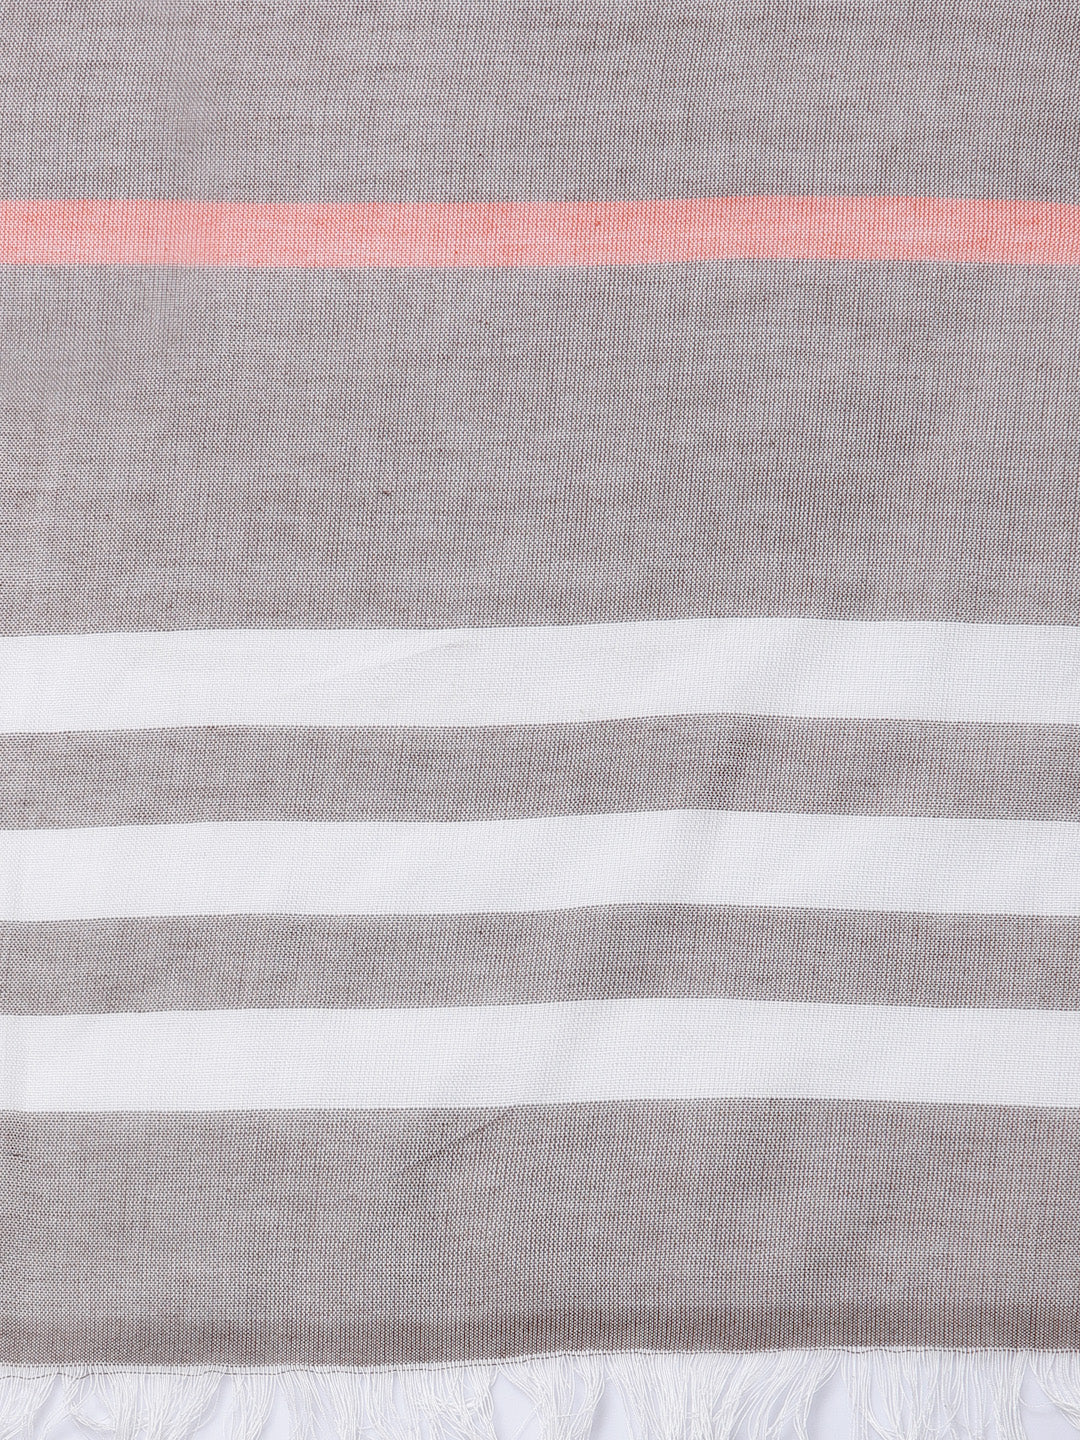 Arrabi Multi Stripes Handwoven Cotton Full Size Stole (185 x 85 cm)